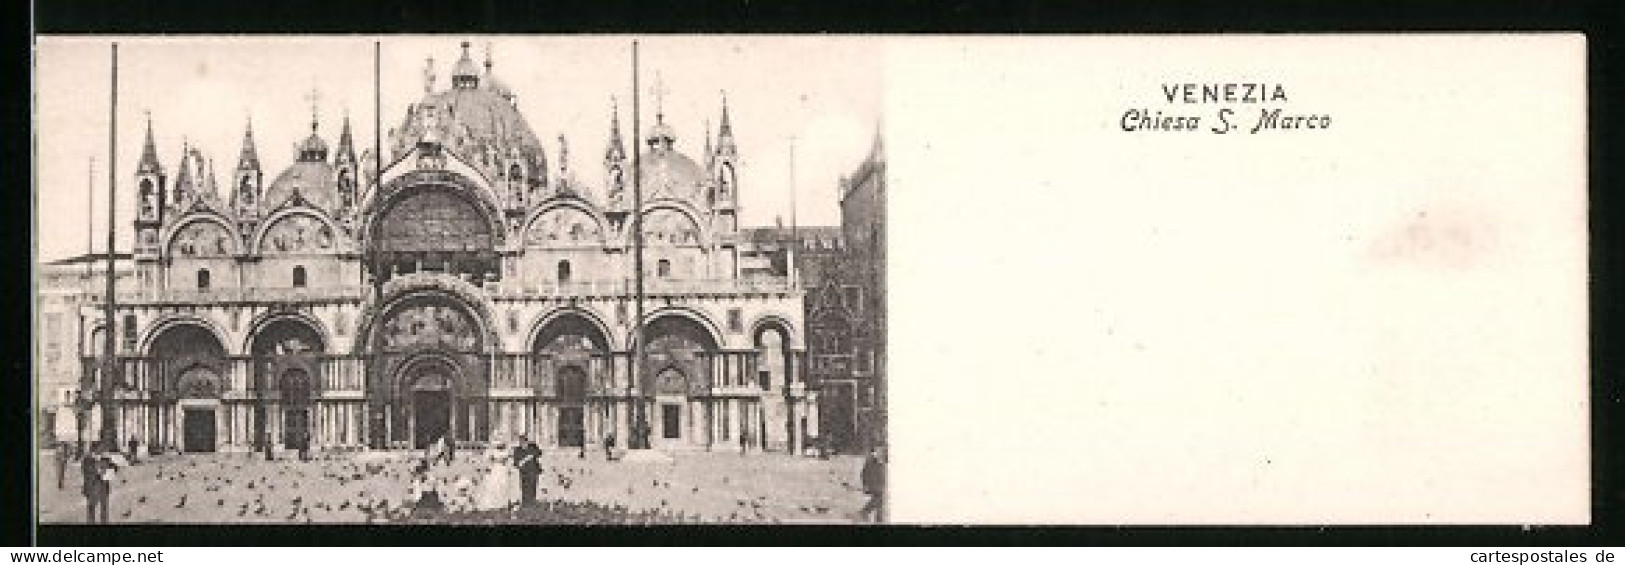 Mini-Cartolina Venezia, Chiesa S. Marco  - Venezia (Venice)